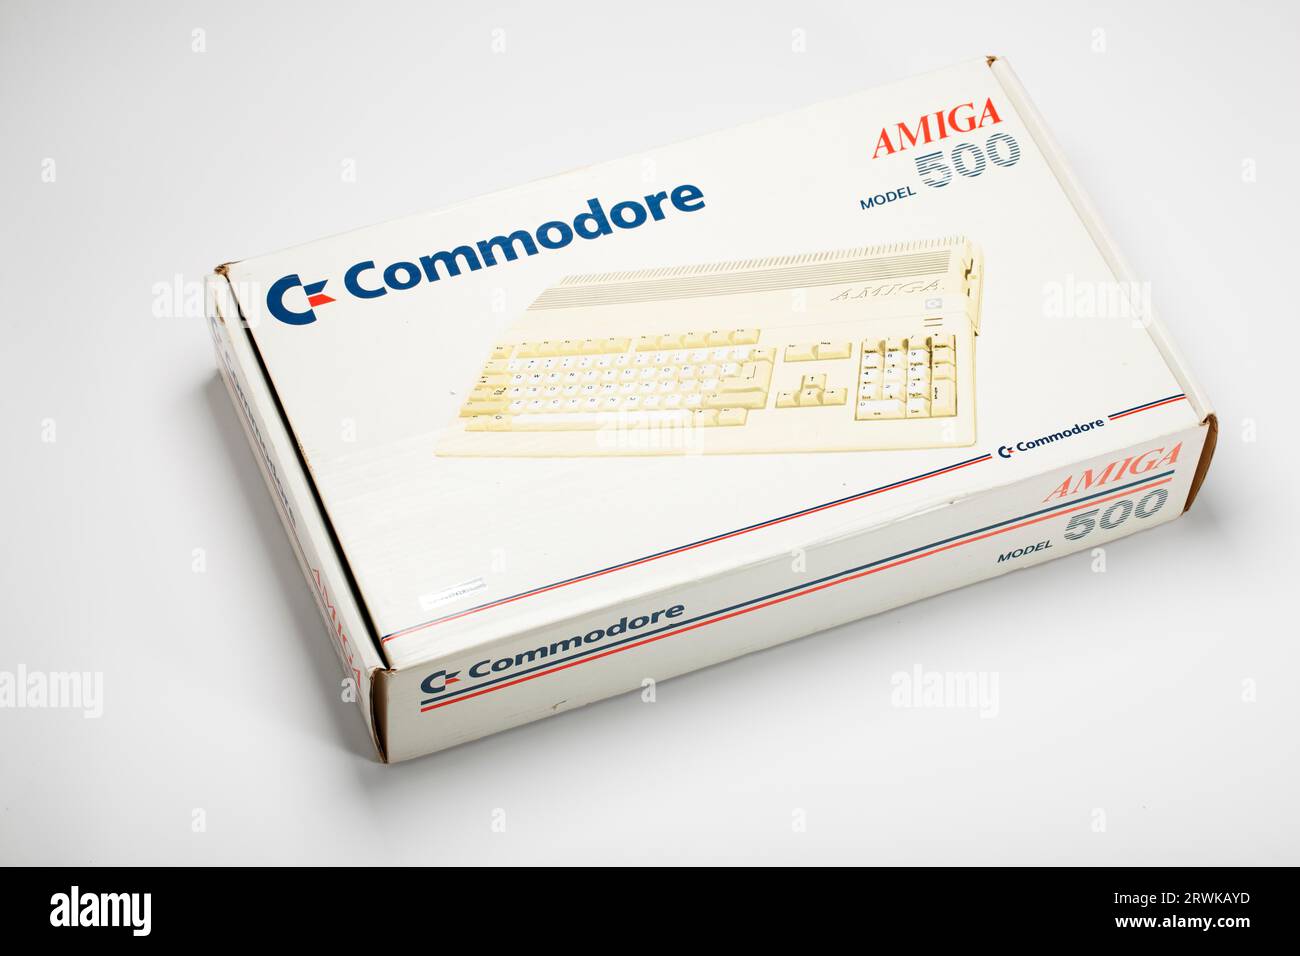 Box of Commodore Amiga computer from the 1980s Stock Photo